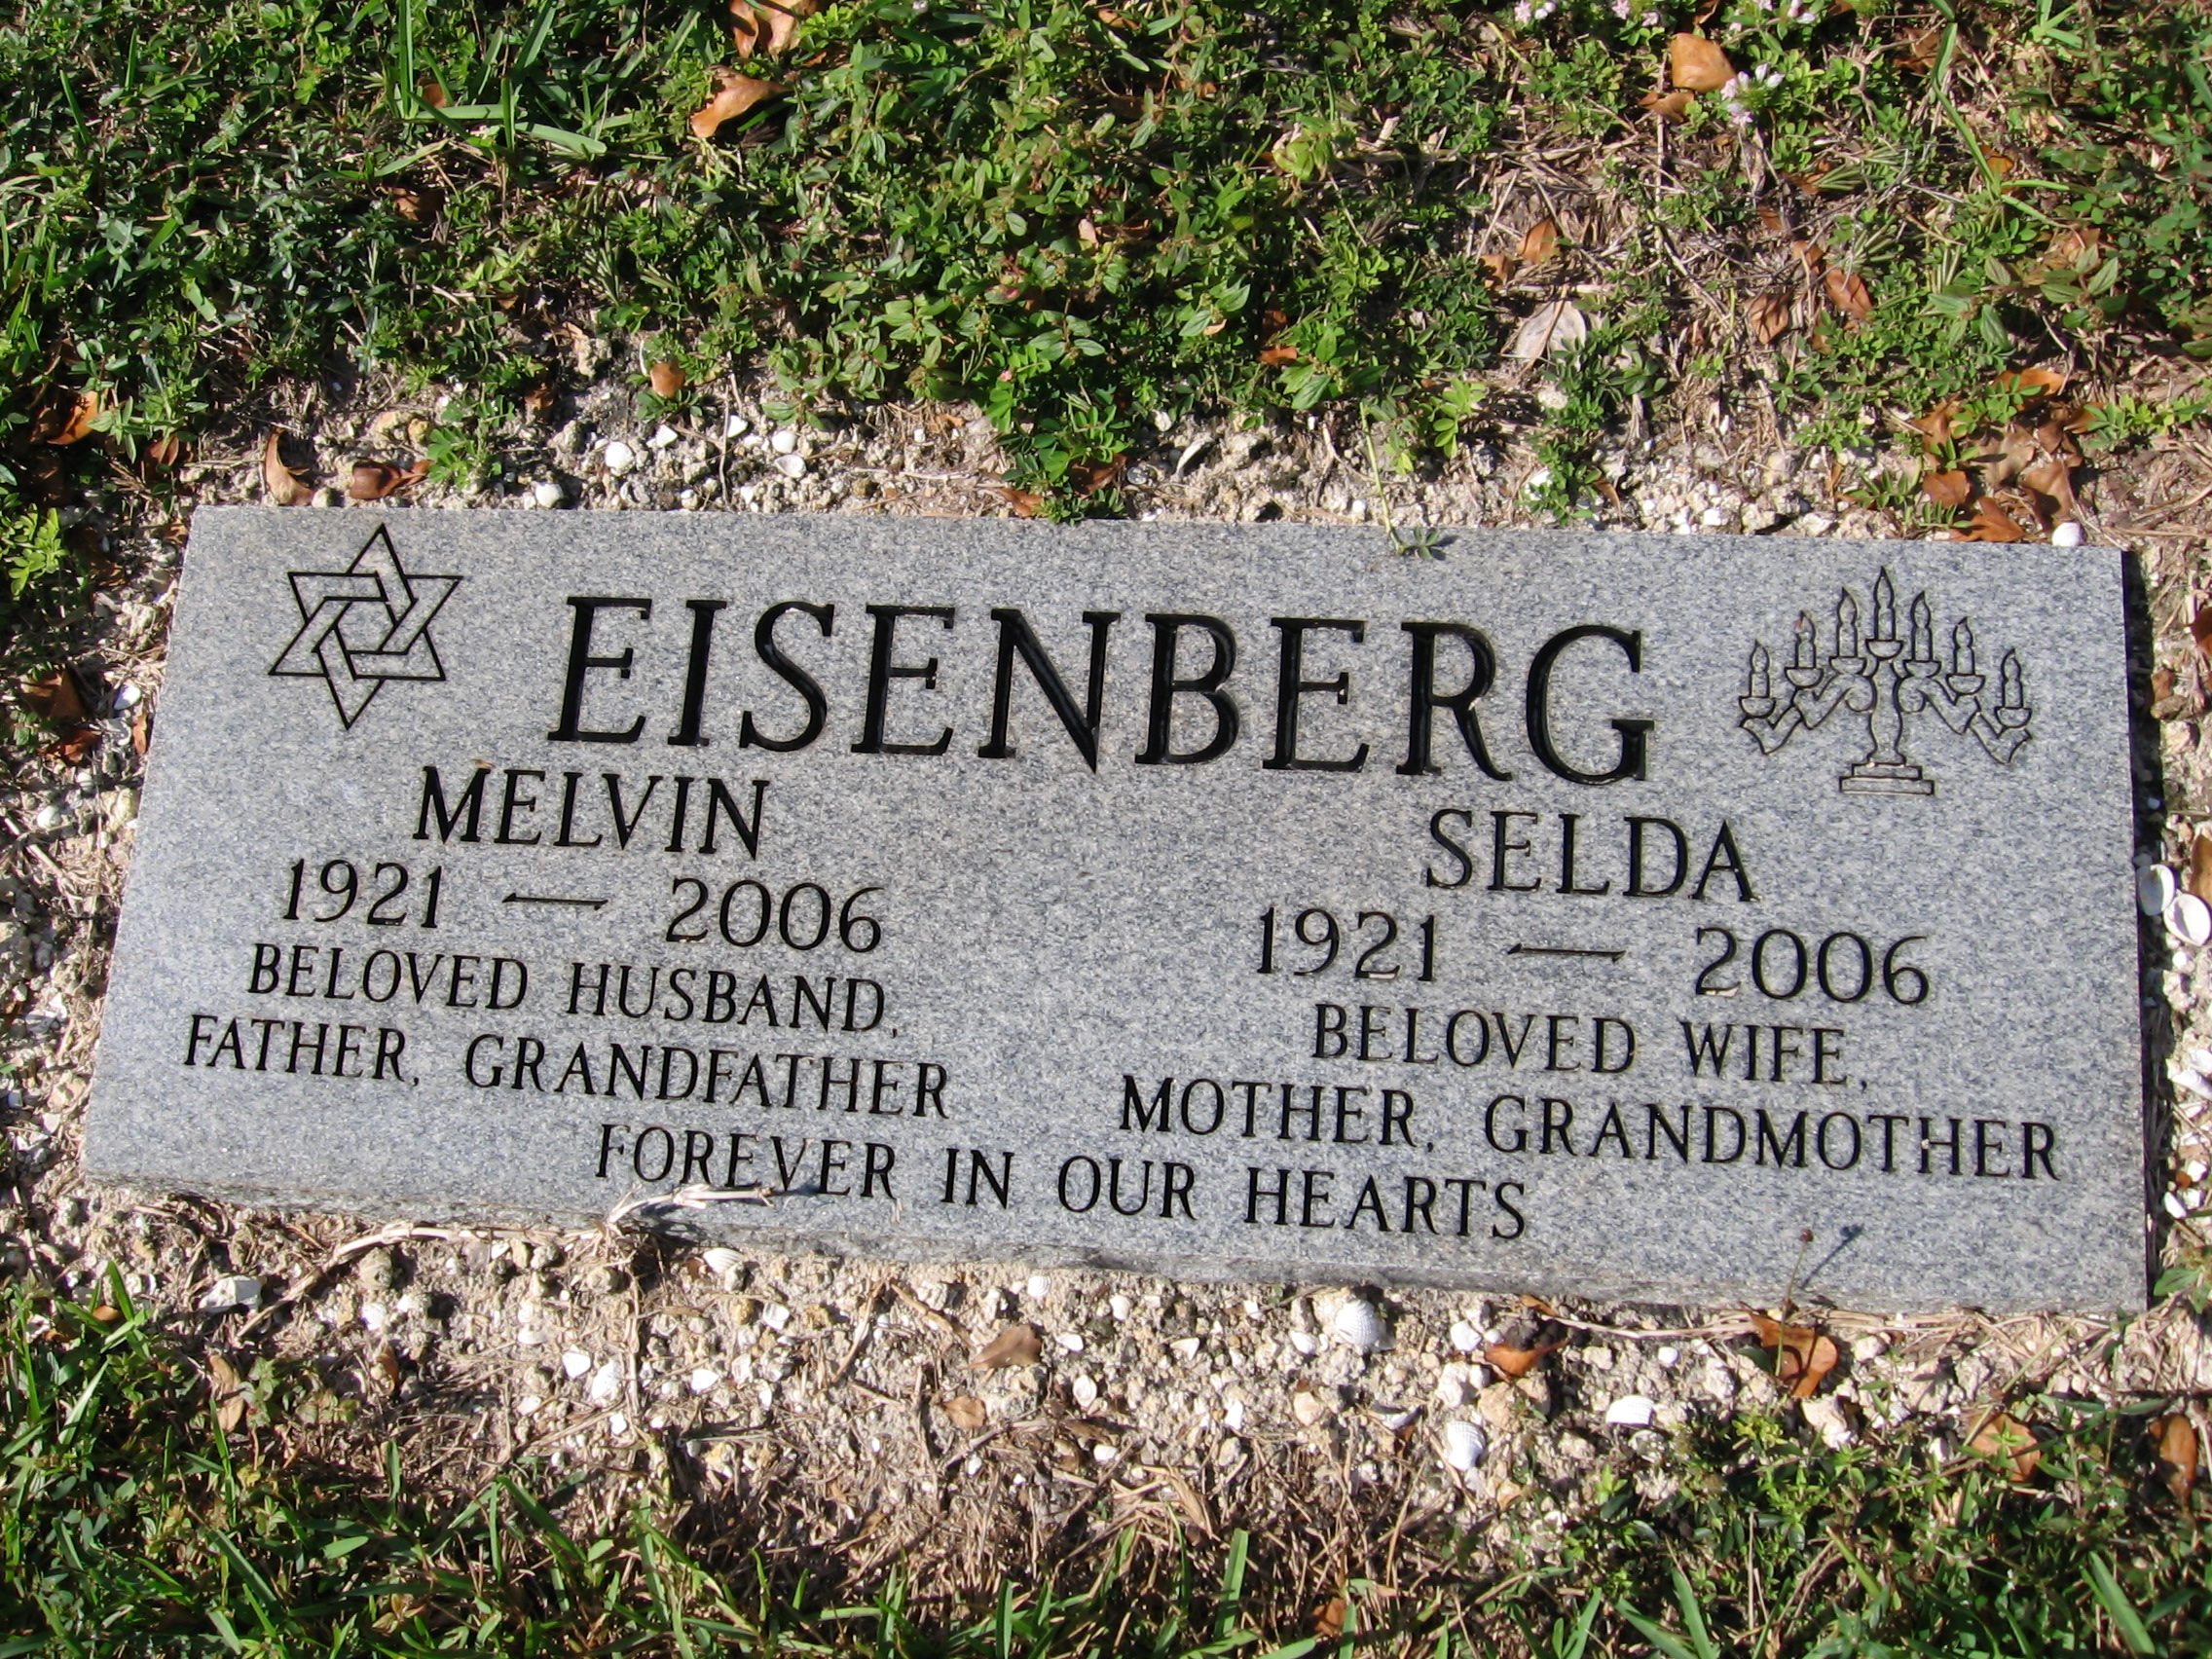 Melvin Eisenberg